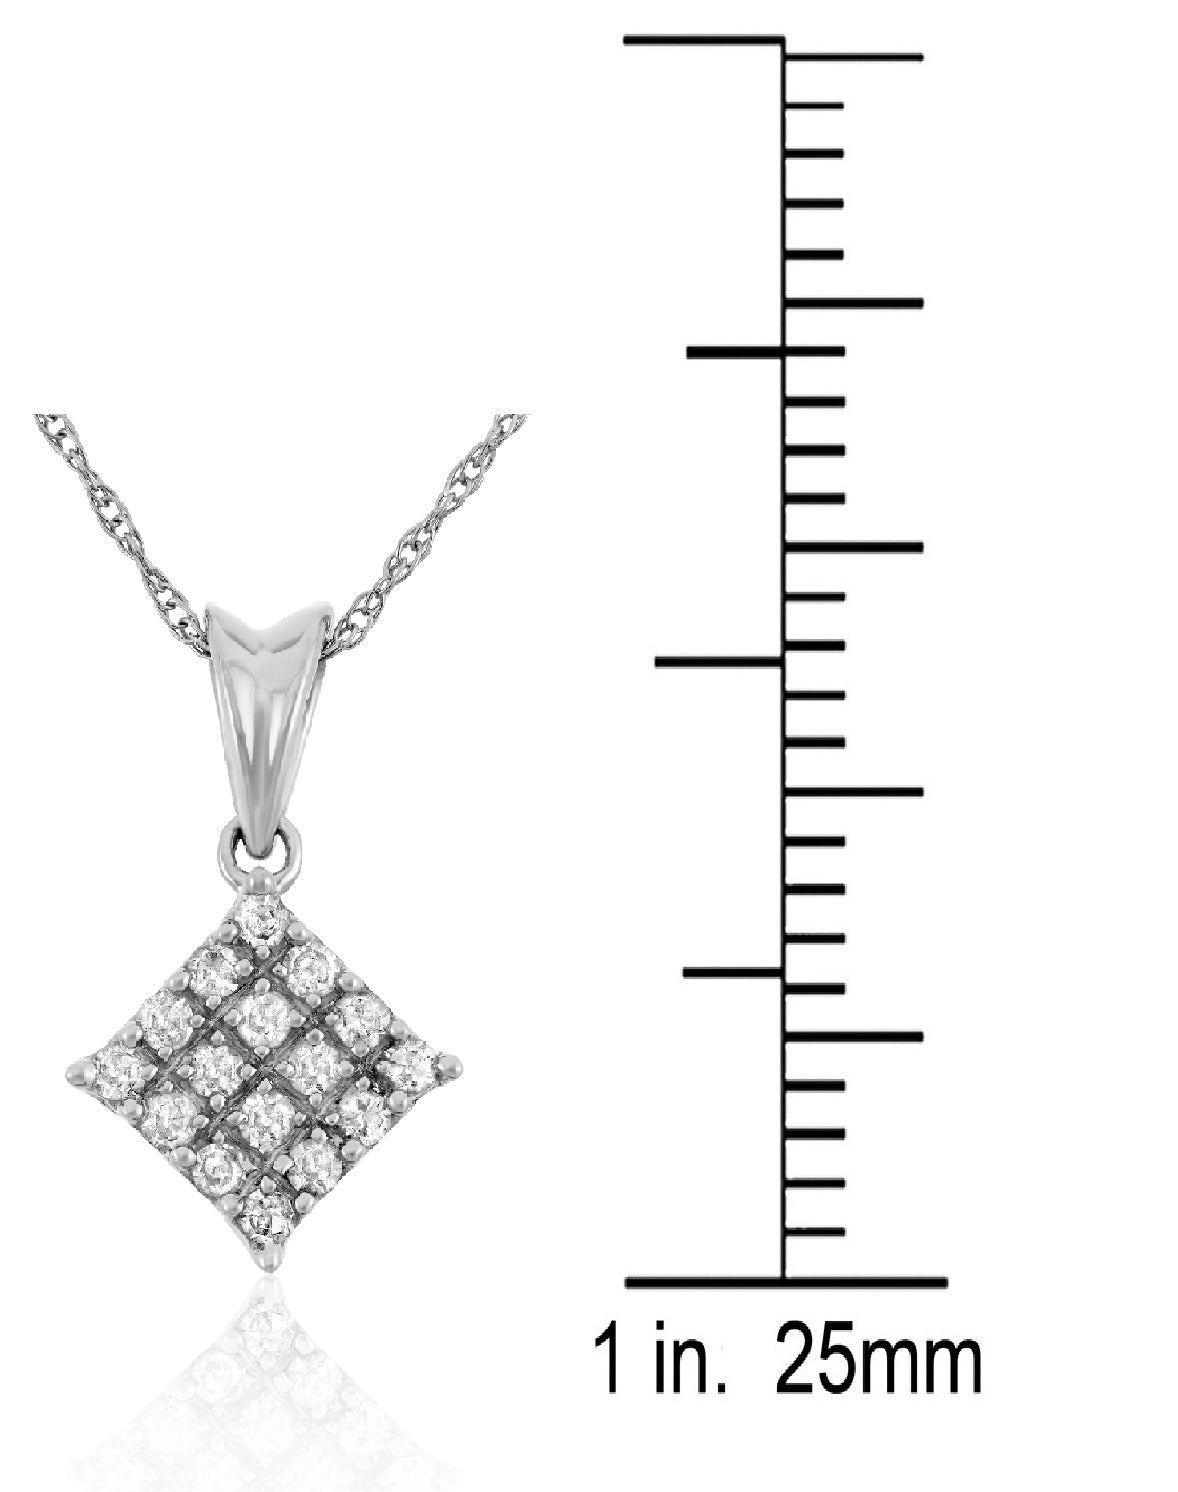 10k White Gold 0.20 ct TDW White Diamond Square Necklace